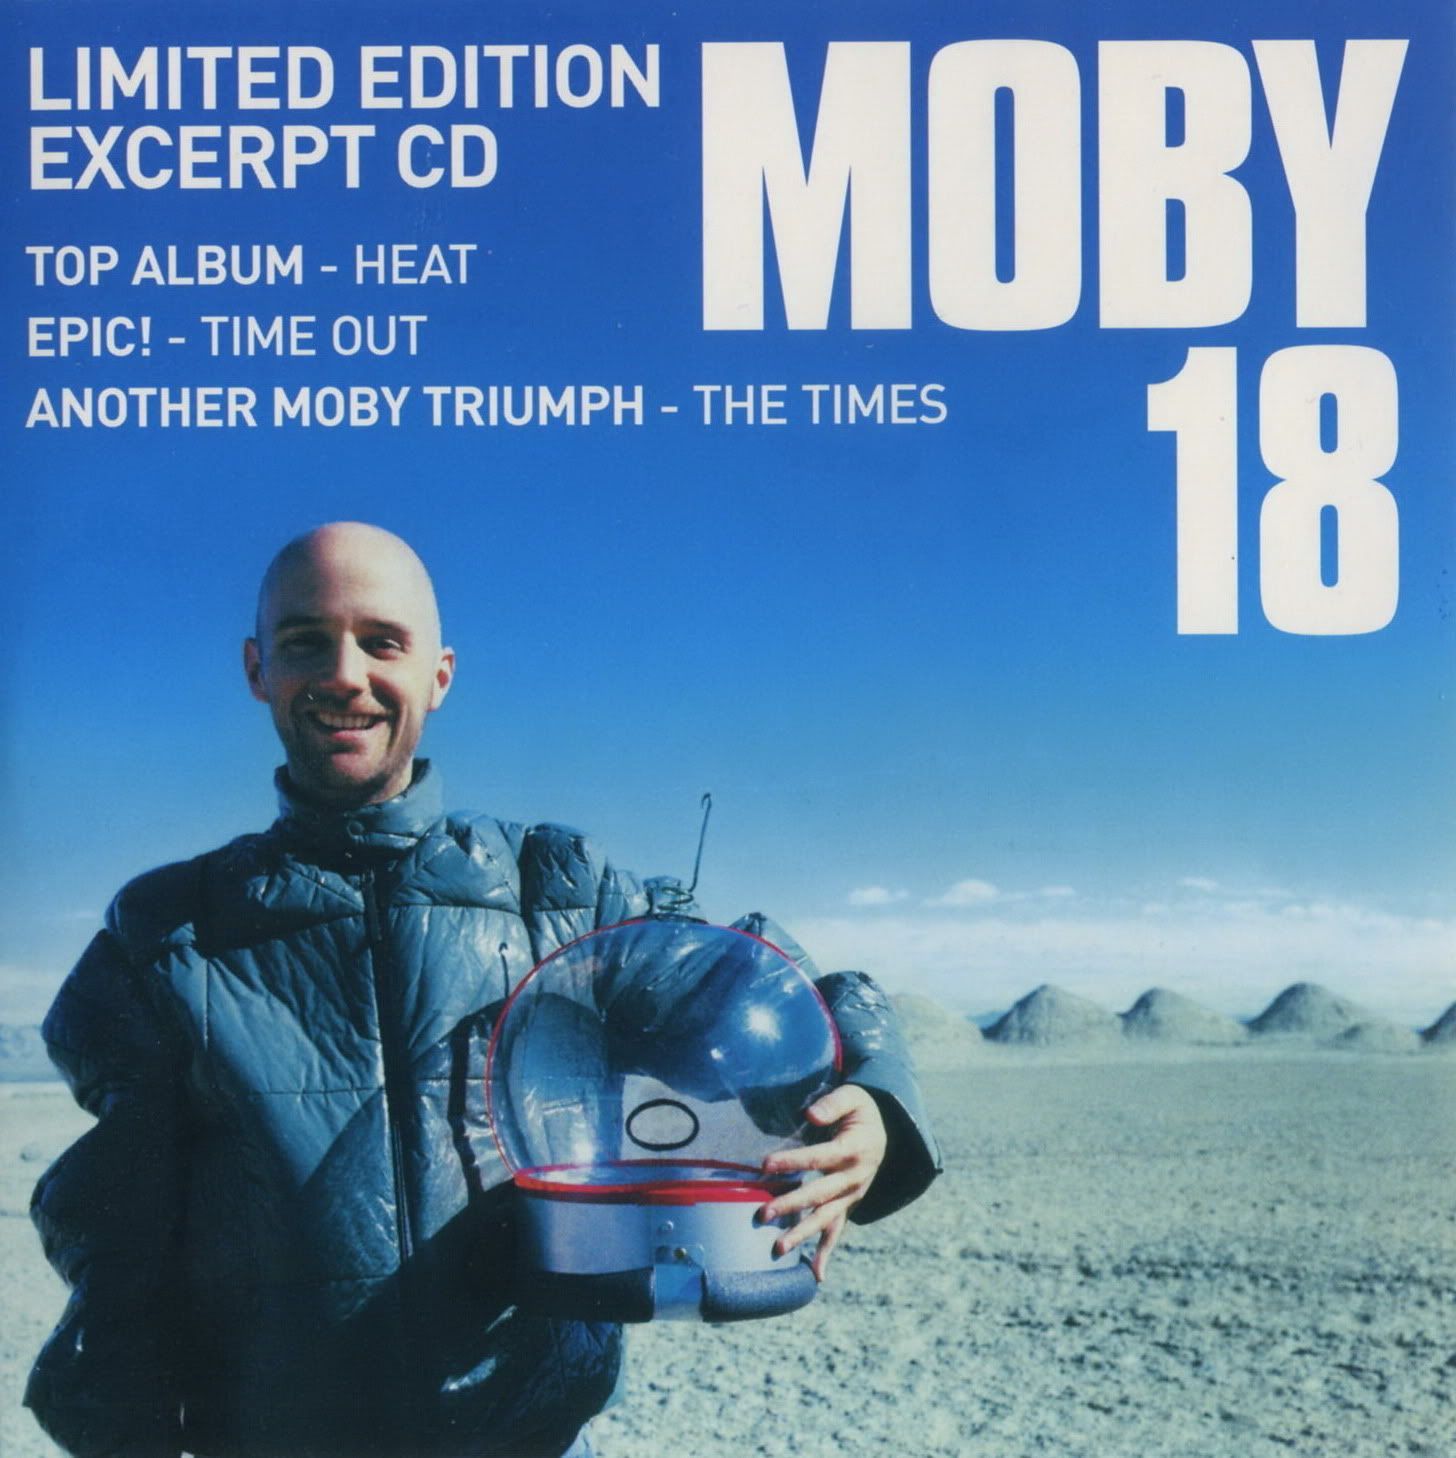 The last day moby перевод песни. Moby 18 2002. Moby обложки альбомов. Moby 1992 CD. Moby 18 обложка.